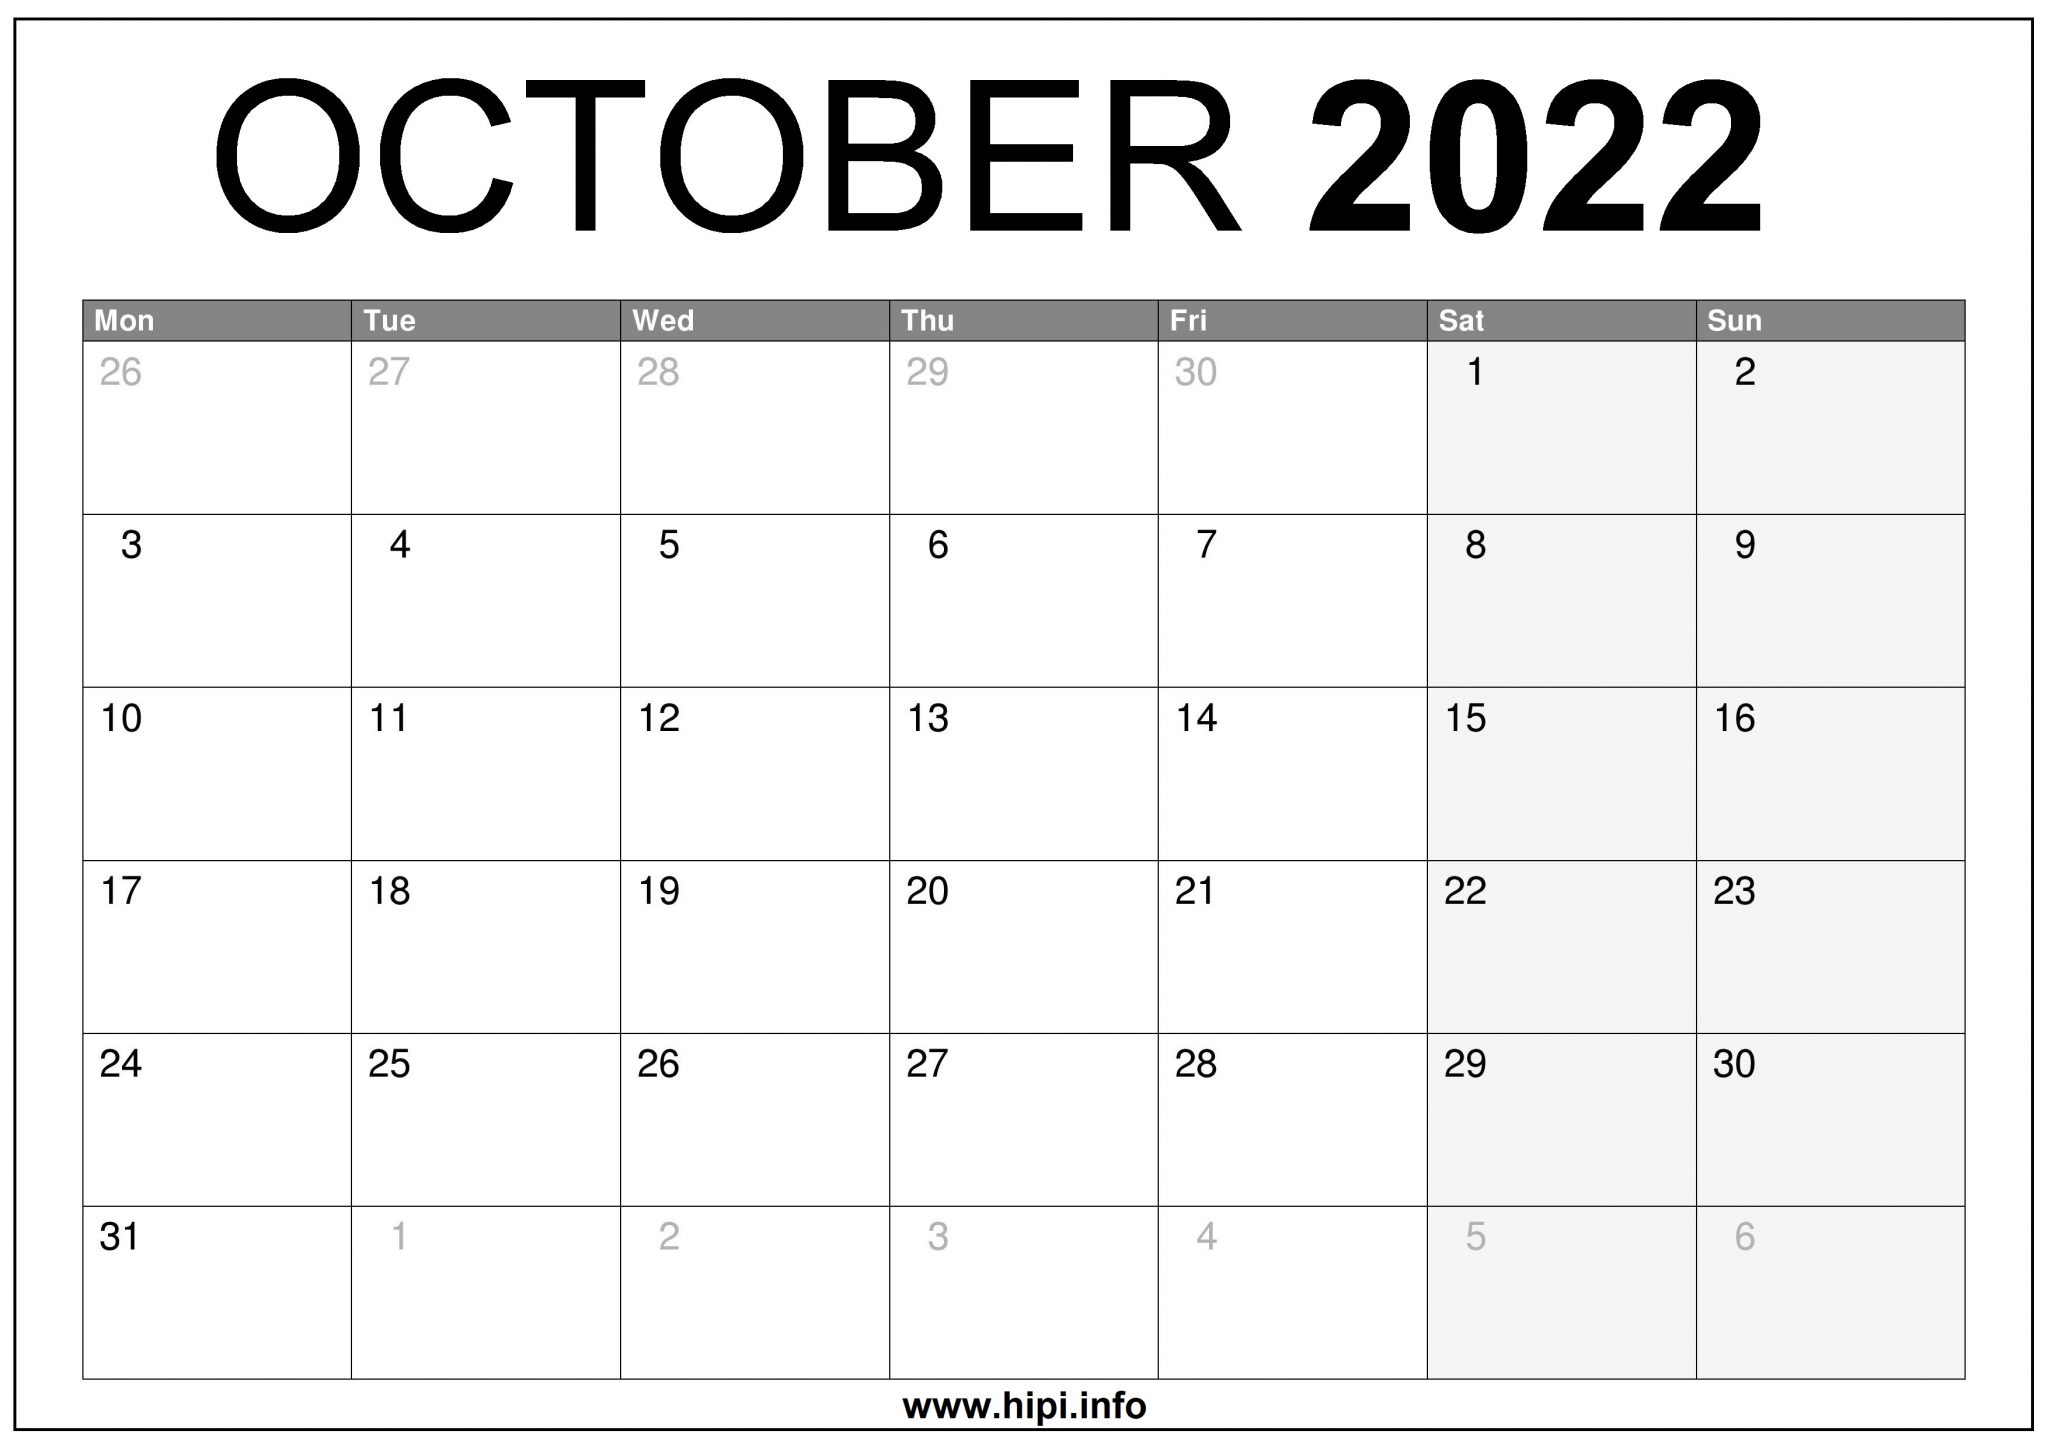 october-2022-uk-calendar-printable-free-hipi-info-calendars